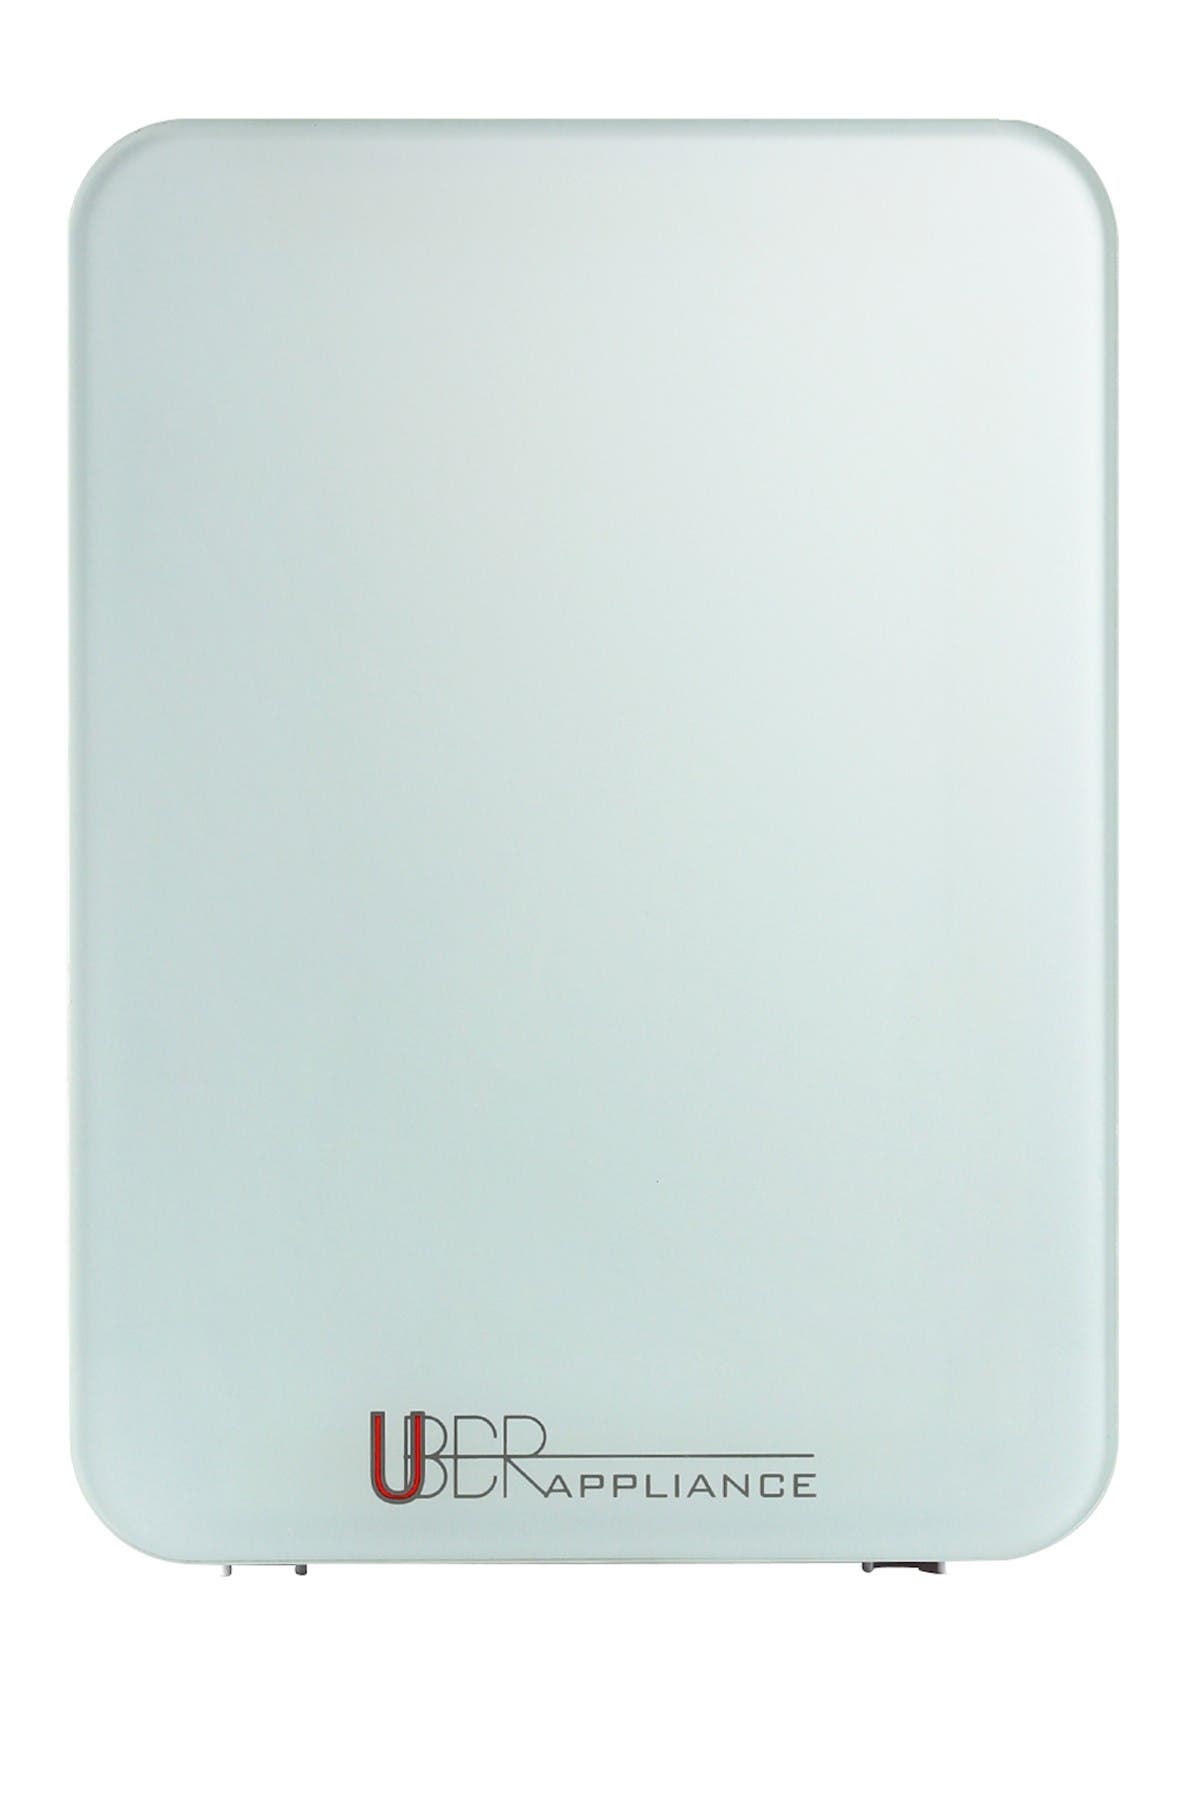 Uber Appliance Chill 2.0 Dry Erase White Board Mini Fridge